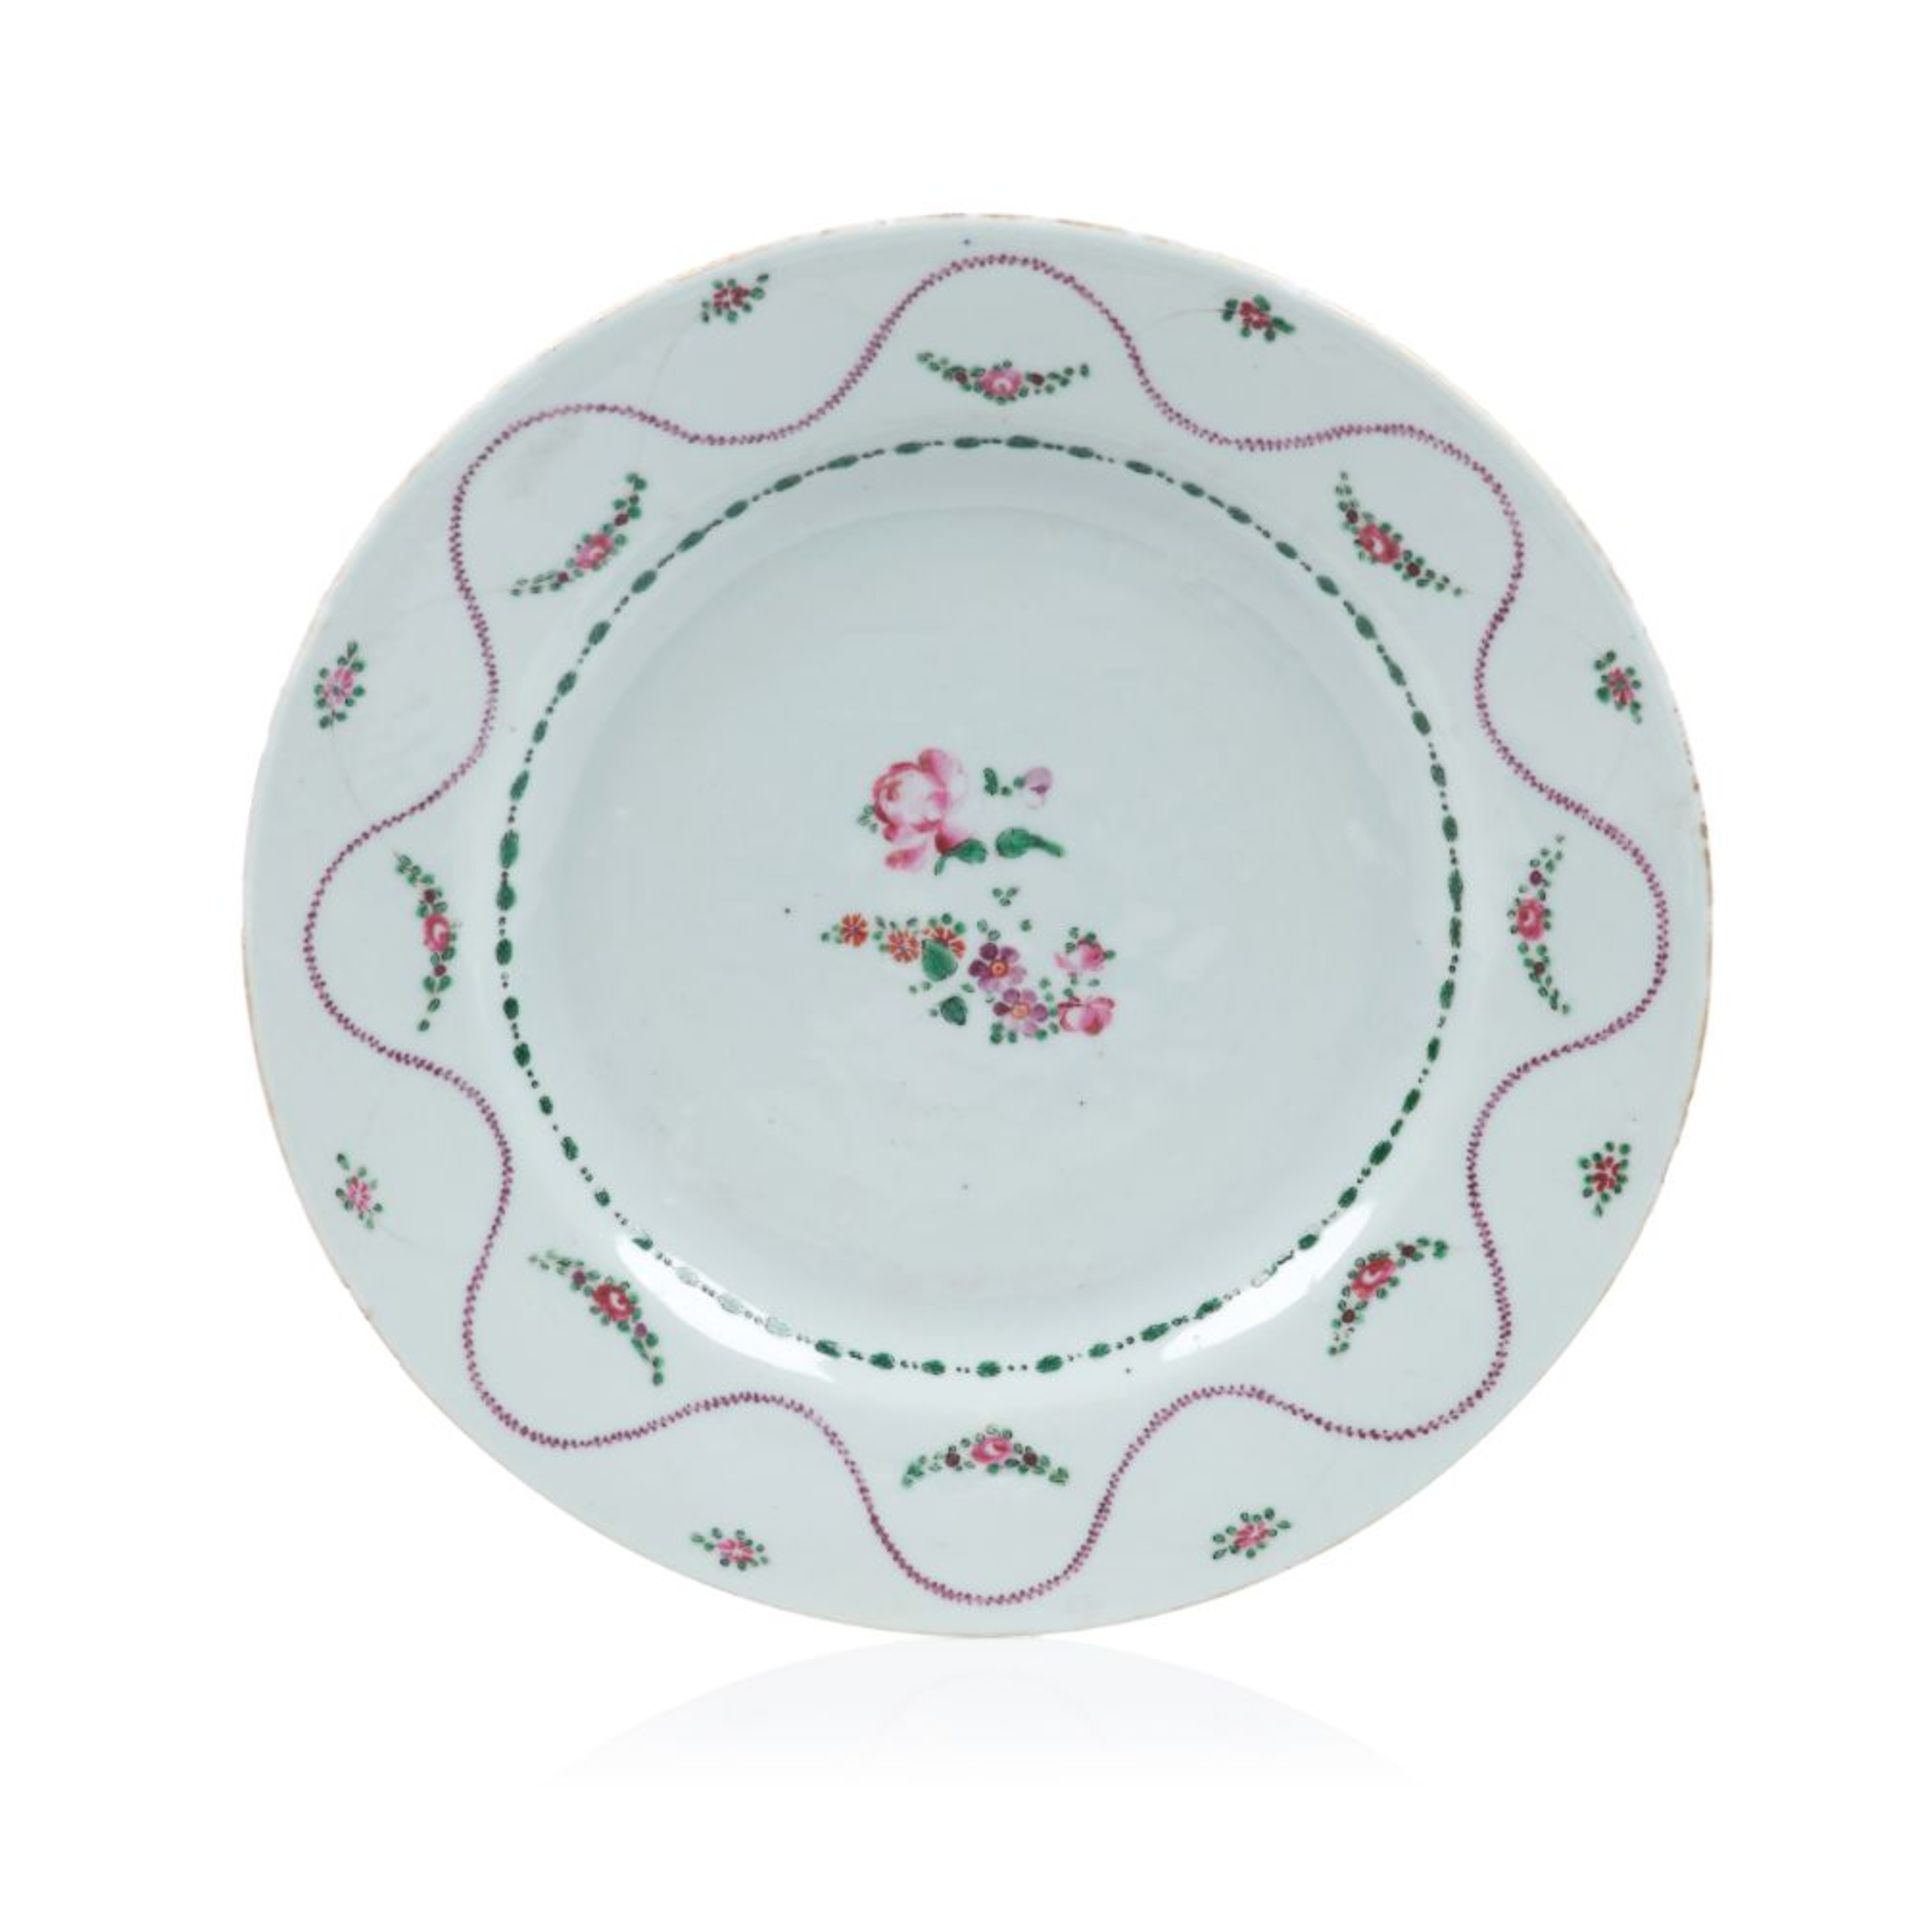 A plate, Chinese export porcelain, Polychrome floral decoration, Qianlong reign (1736-1795), (